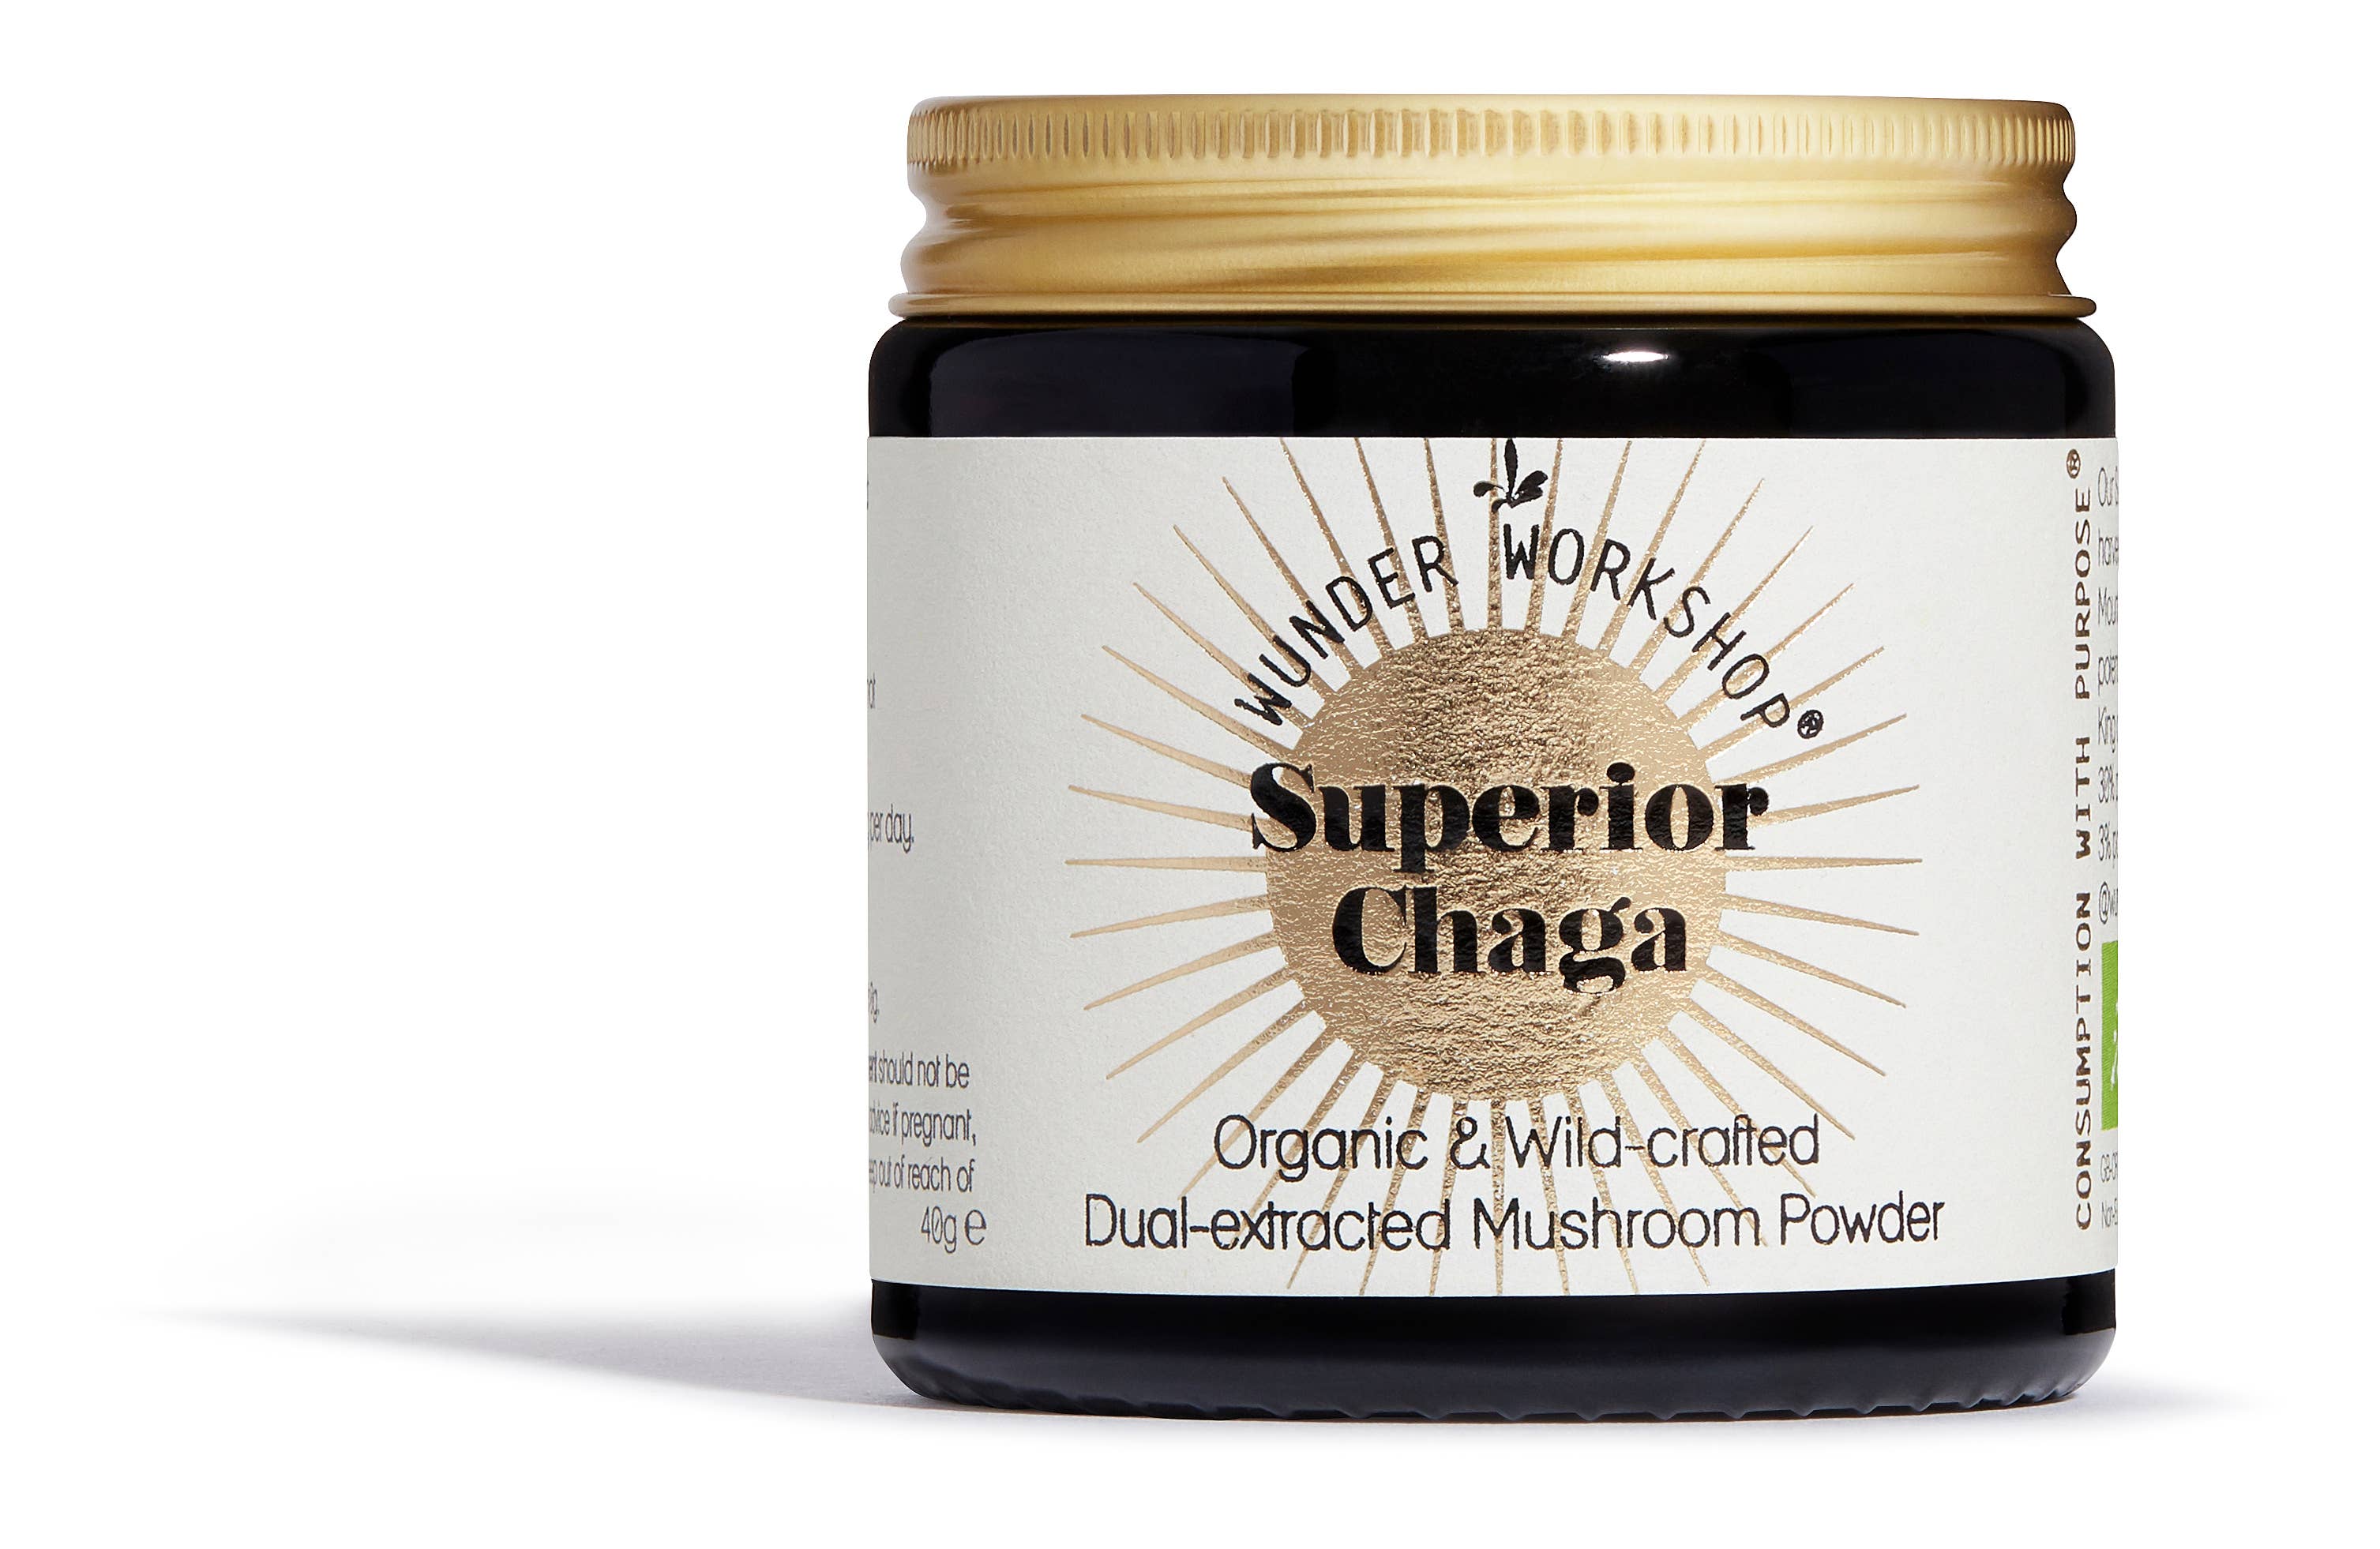 Superior Chaga Mushroom Extract Powder (40g)